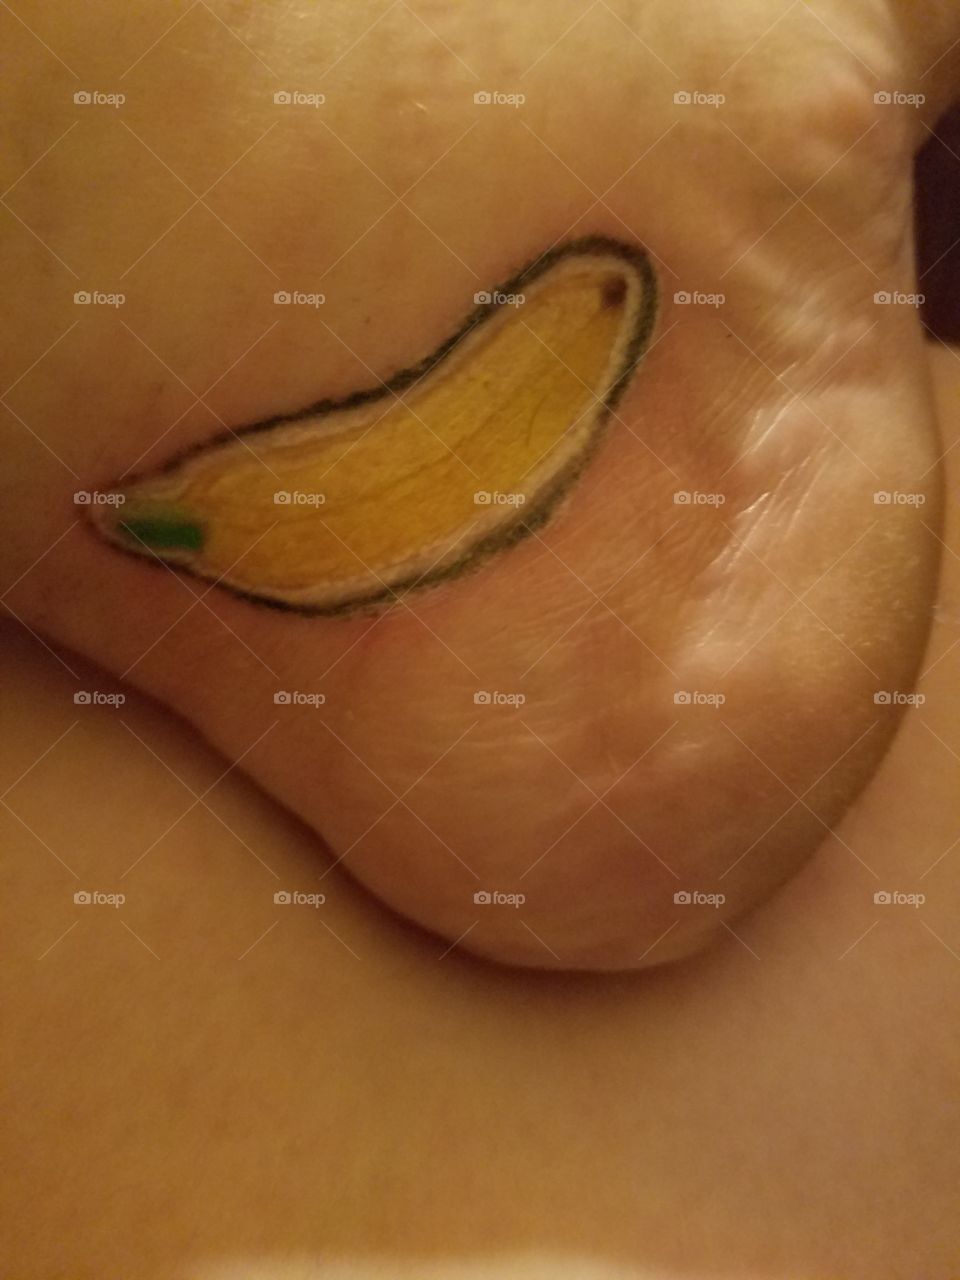 banana sticker tattoo